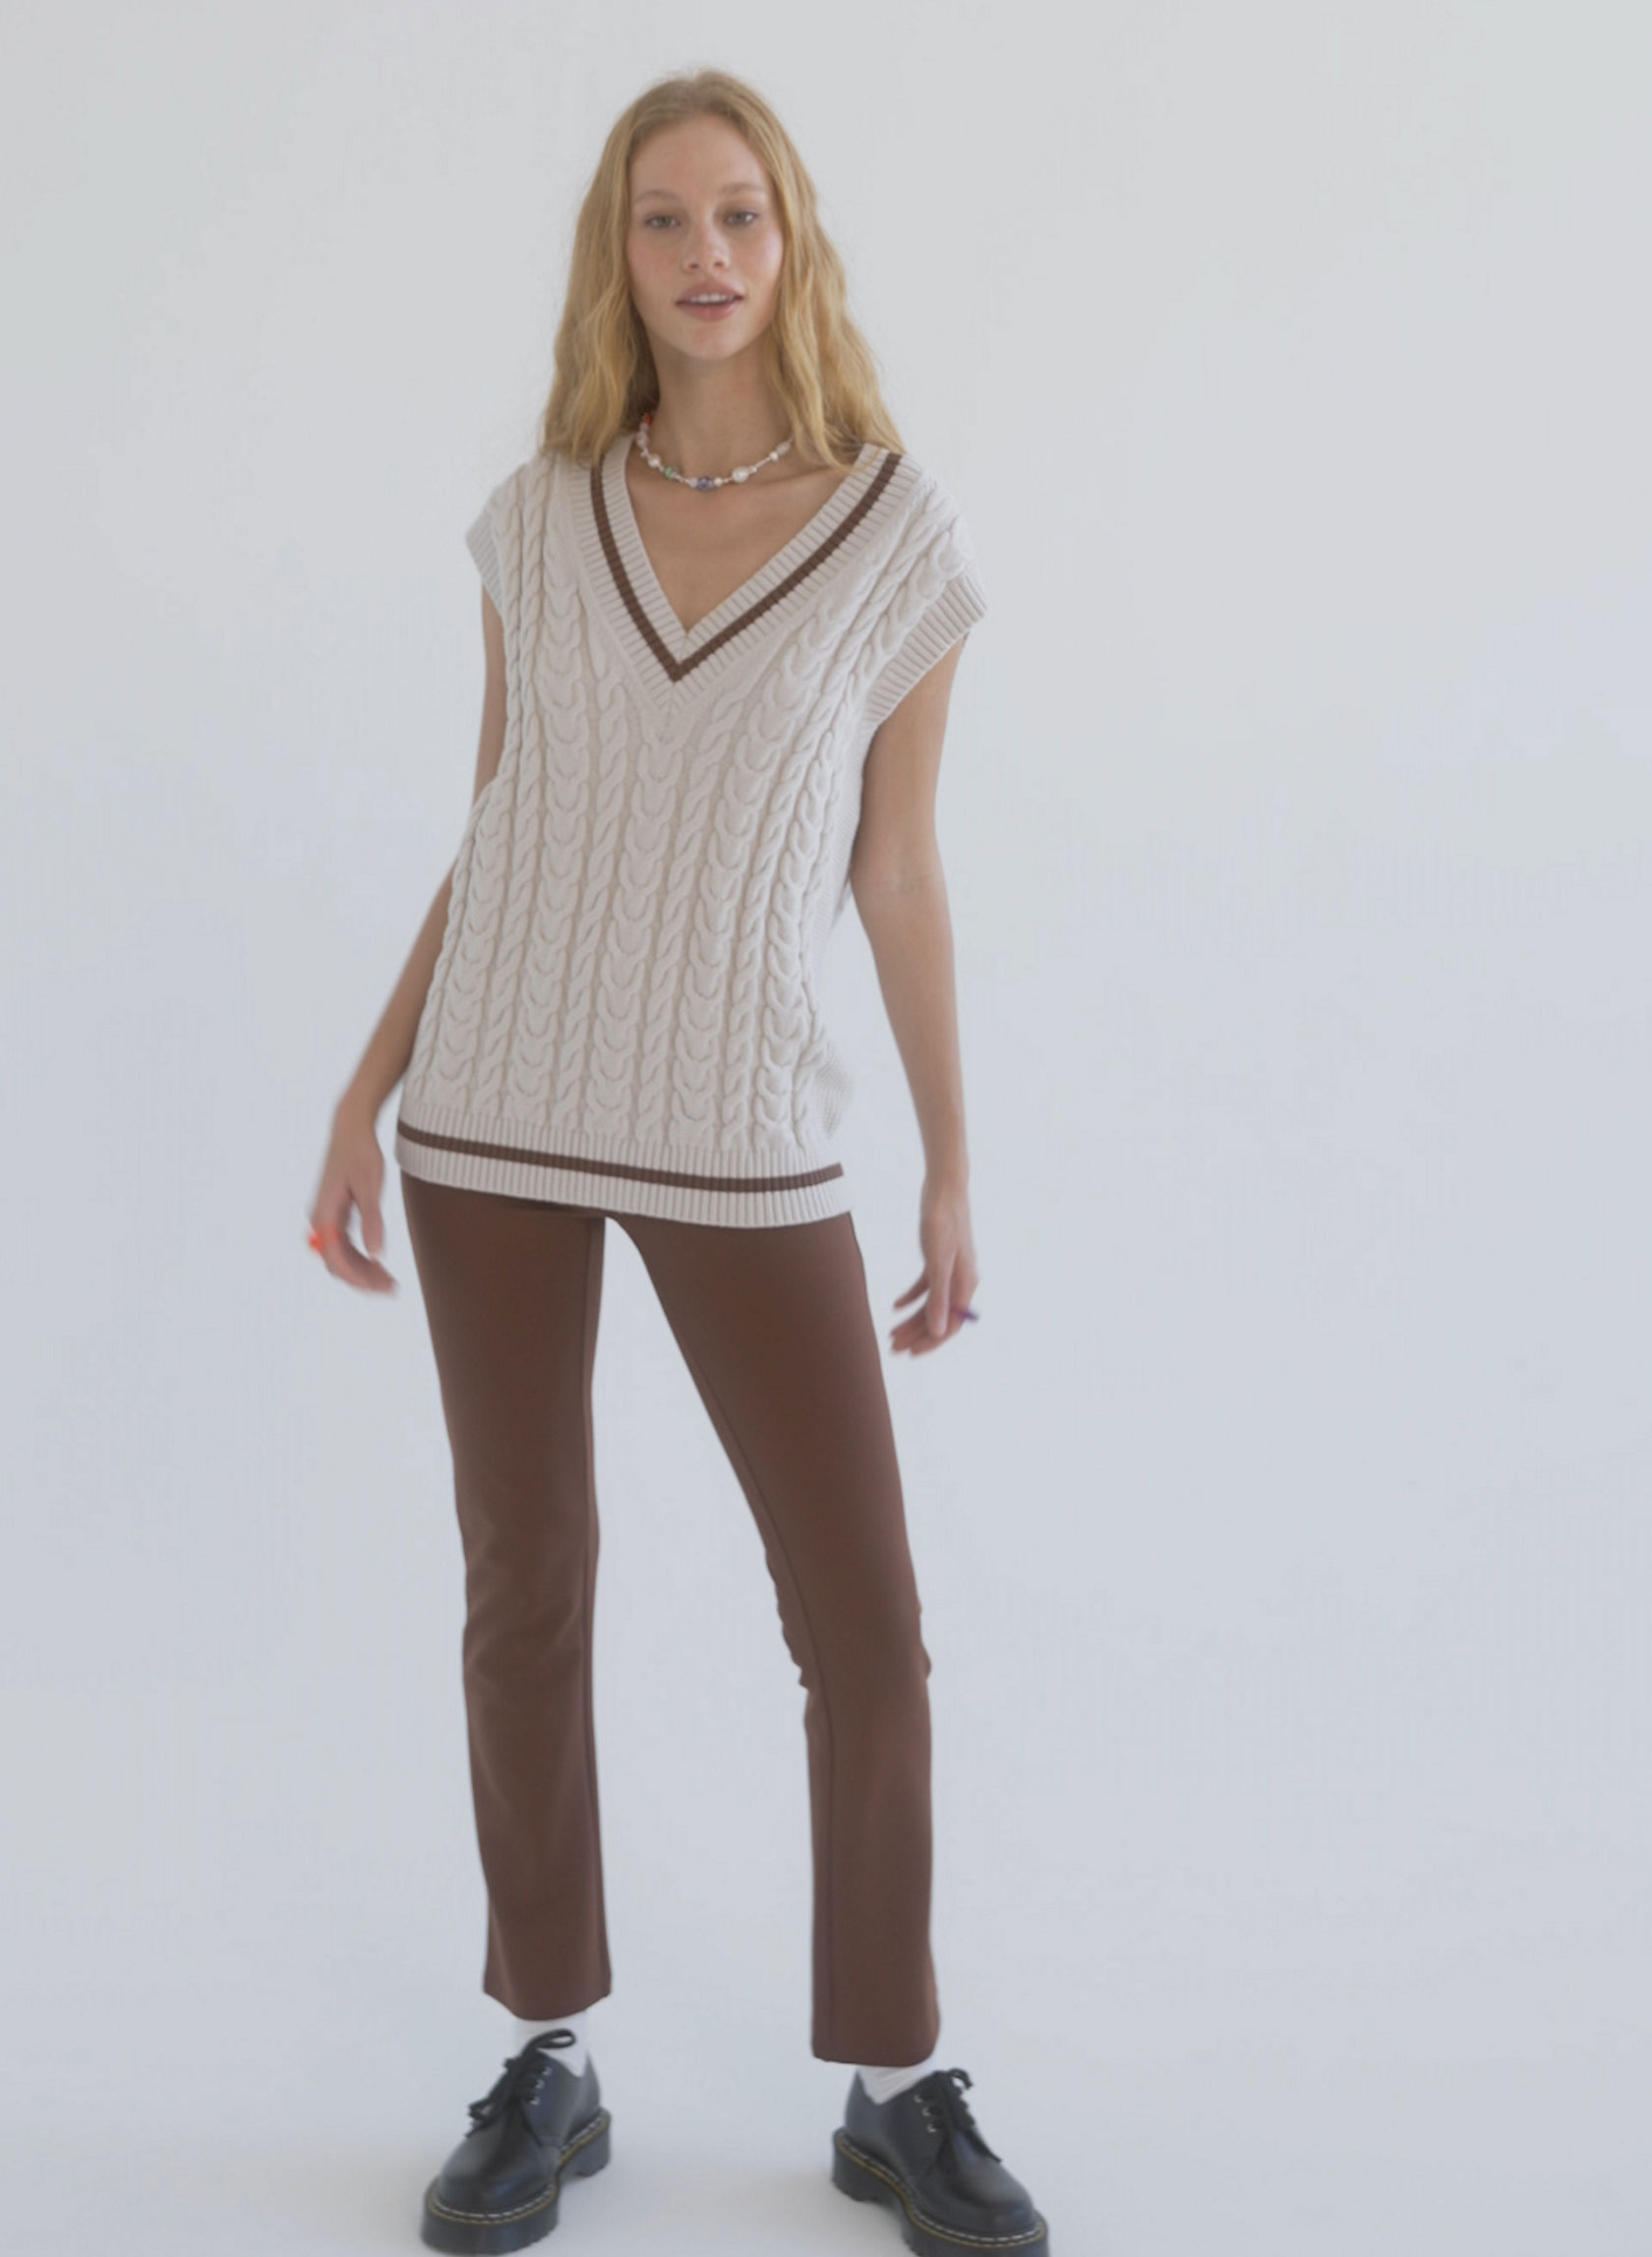 WINSTON SWEATER VEST - Cable-knit sweater vest